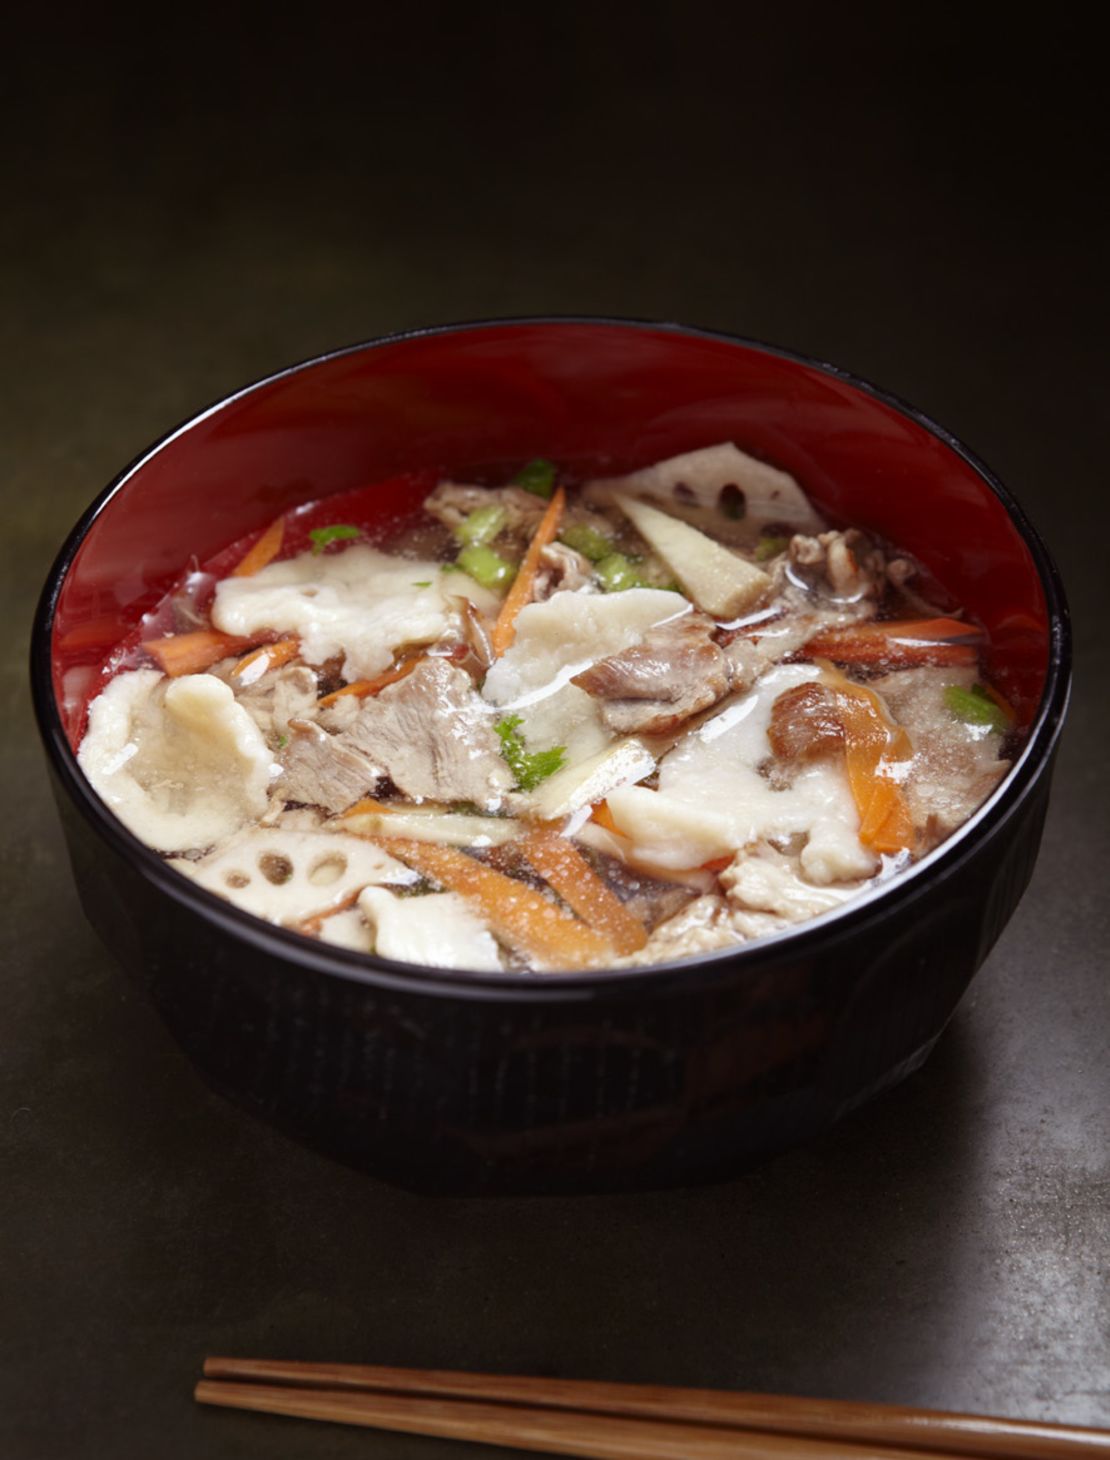 Hittsumi-jiru: Classic Tohoku comfort food